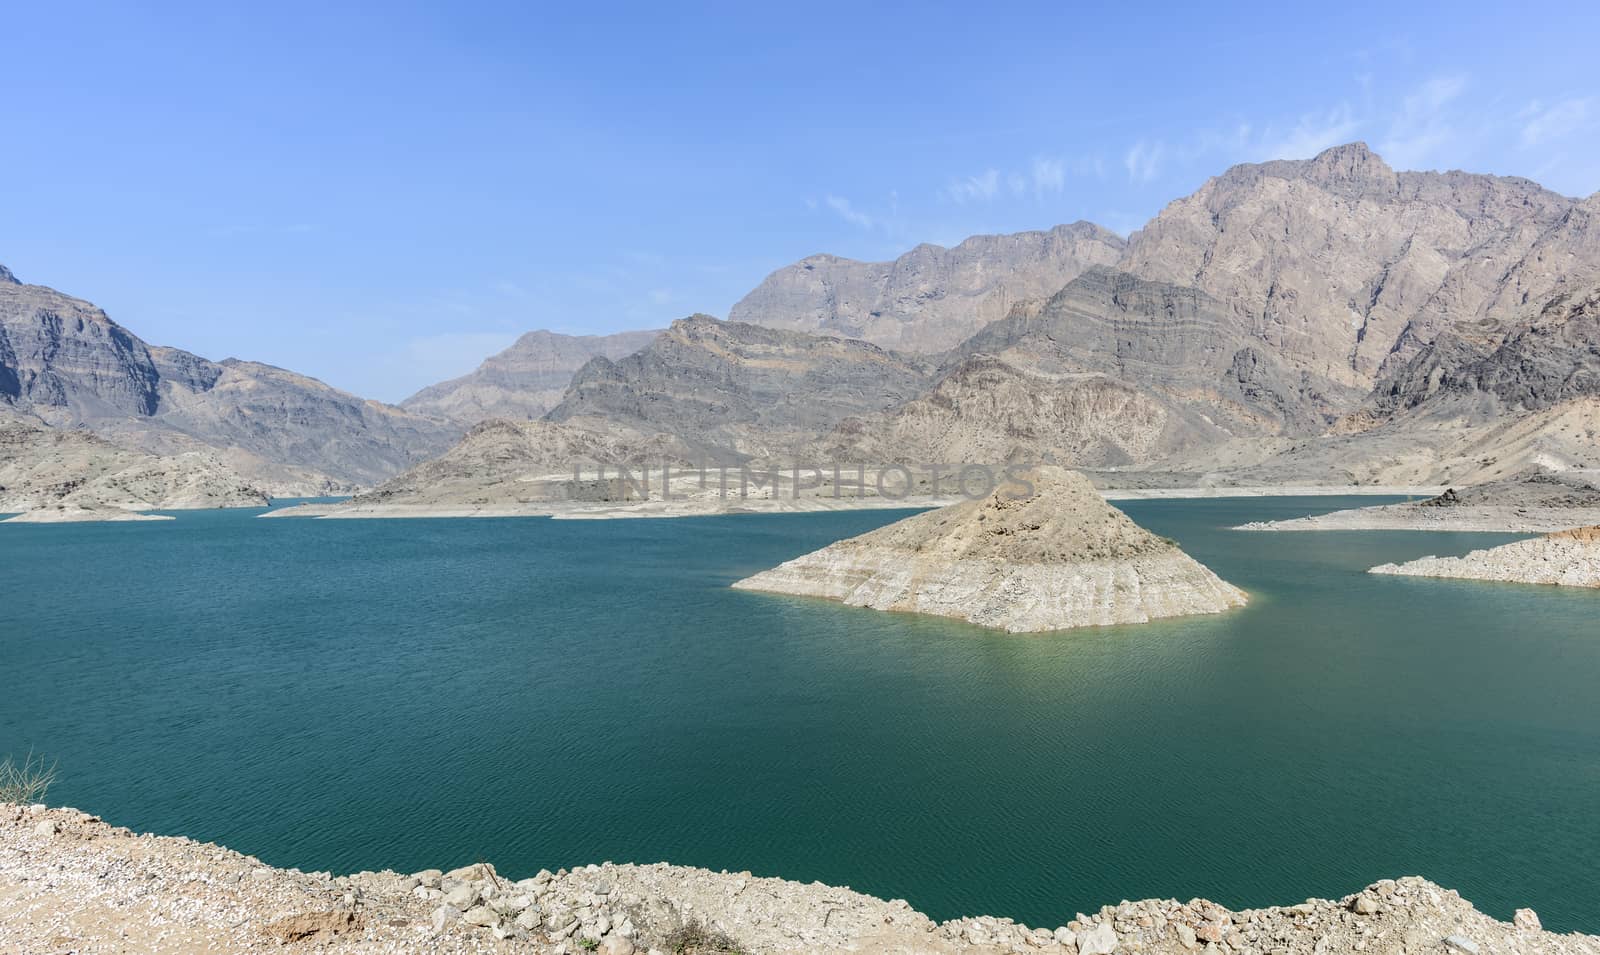 Lake of Wadi Dayqah Dam, Sultanate of Oman by GABIS